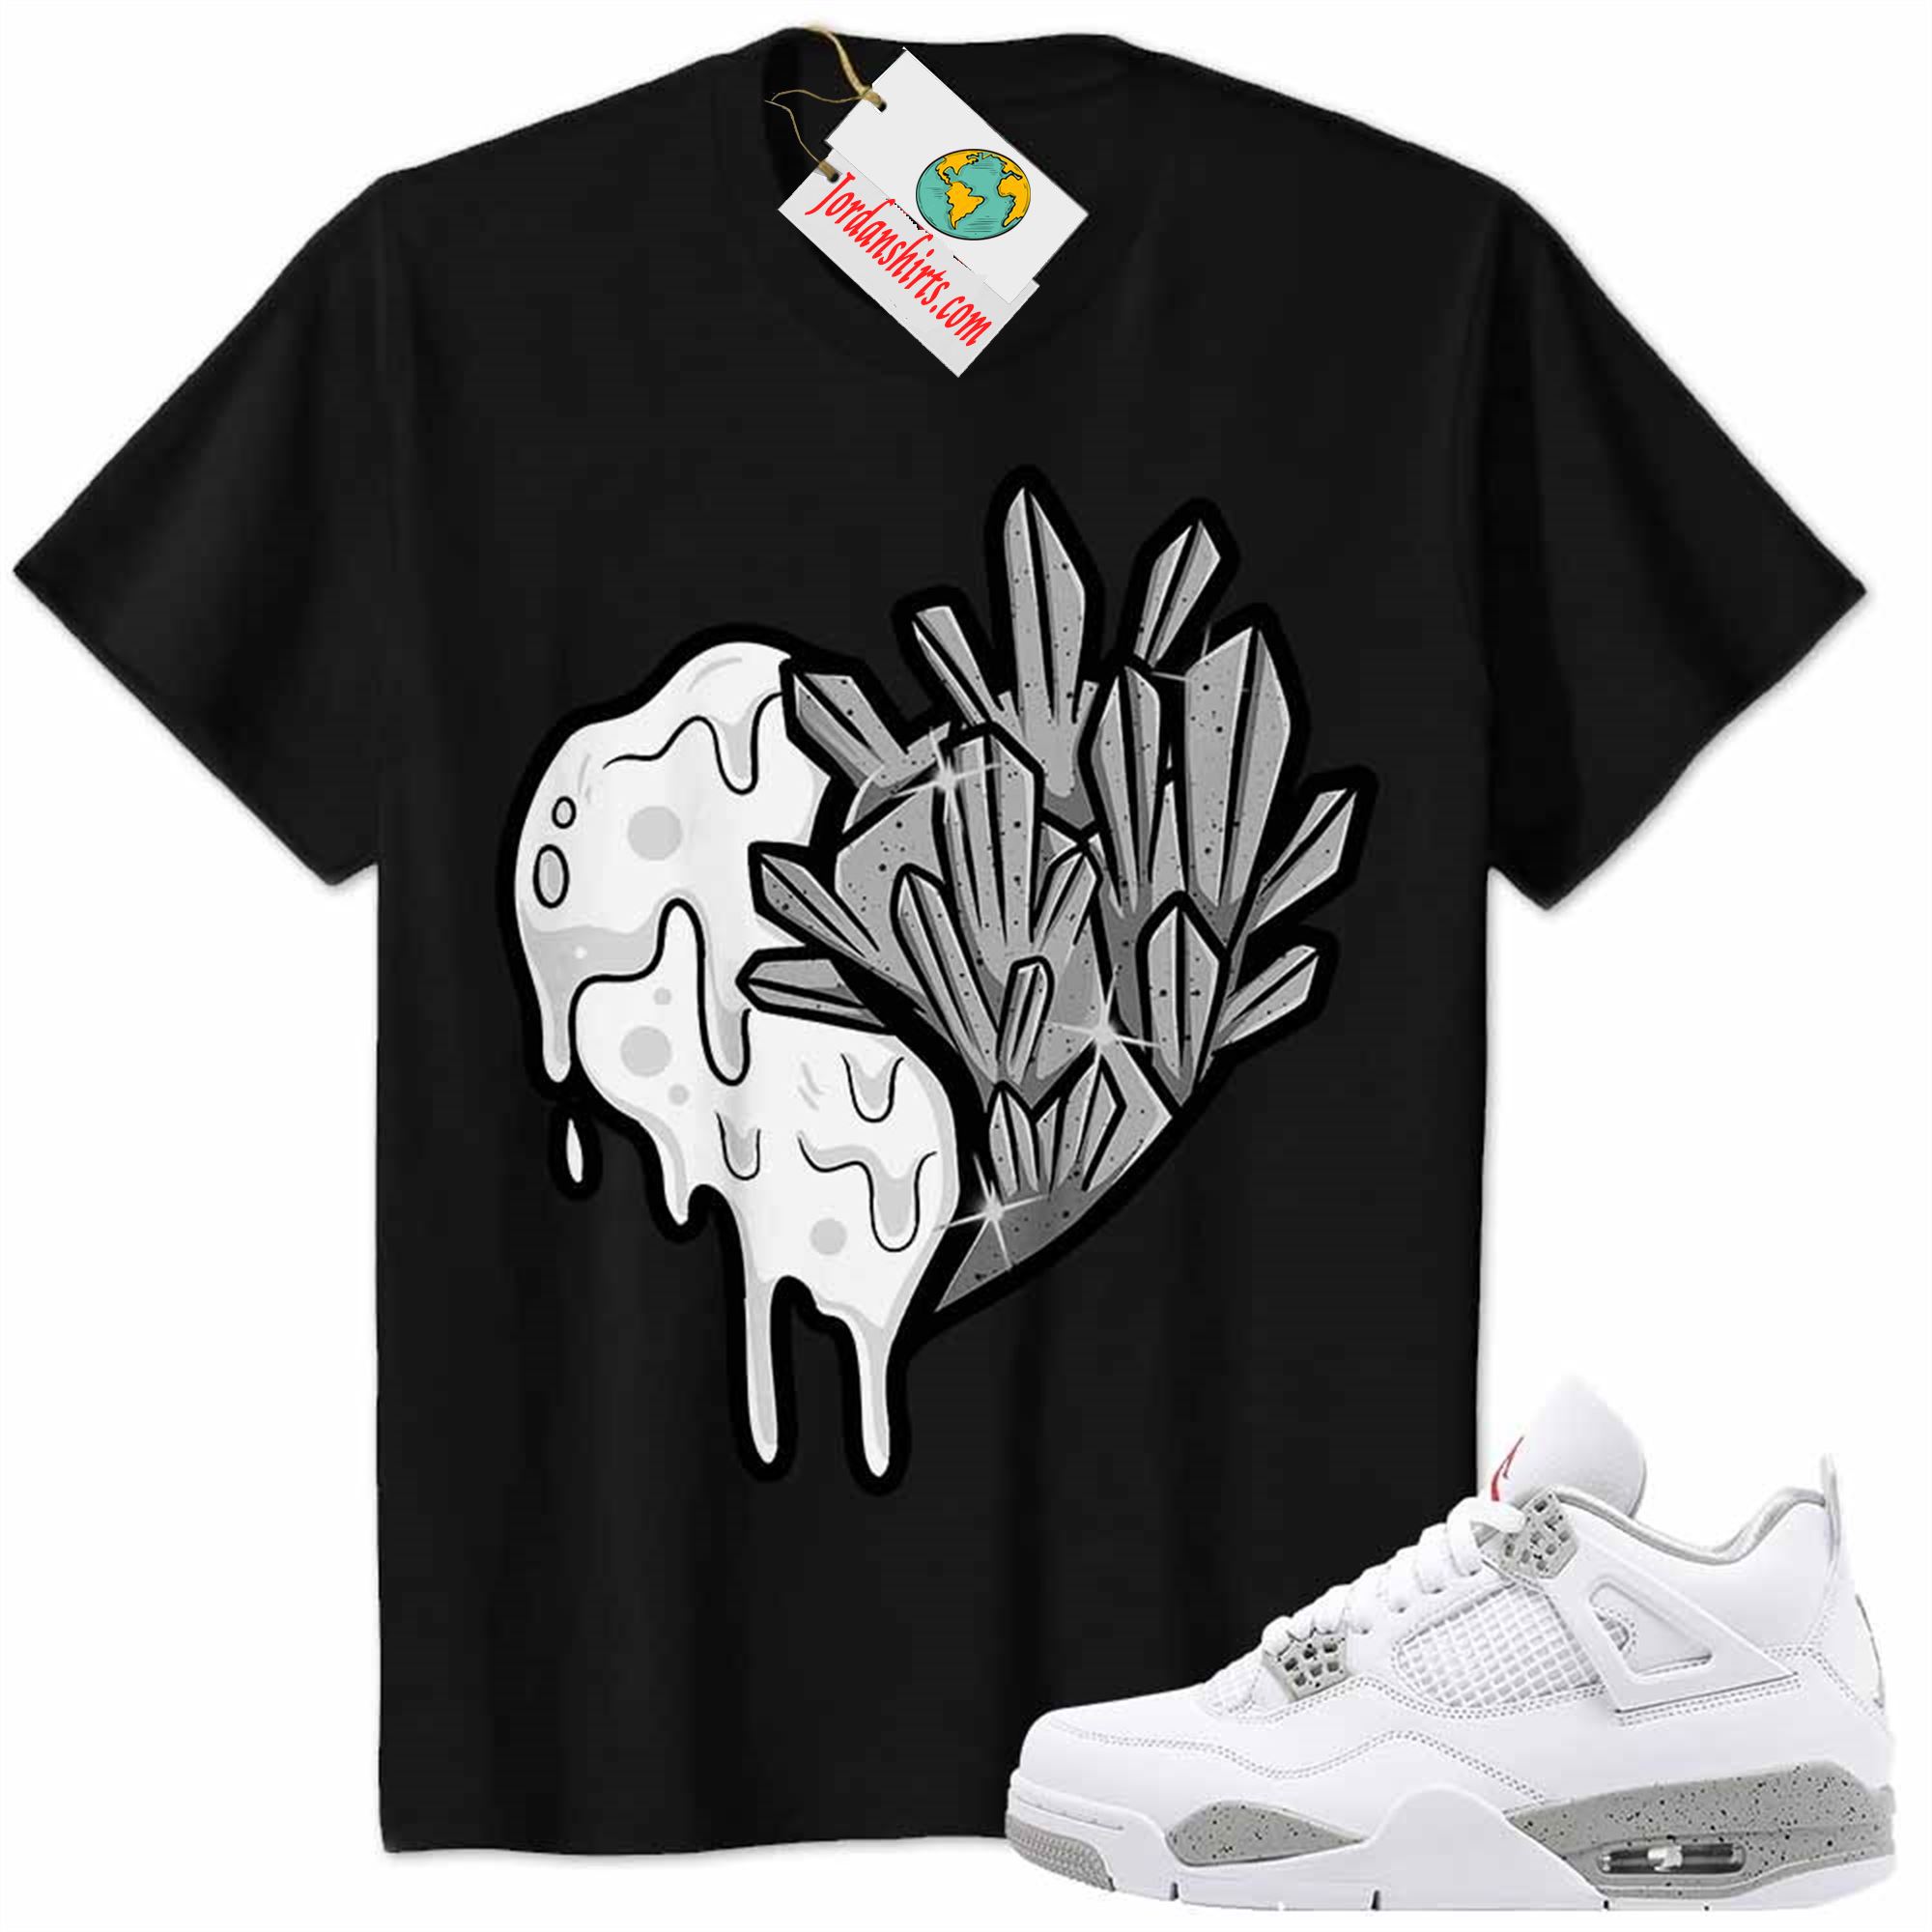 Jordan 4 Shirt, Crystal And Melt Heart Black Air Jordan 4 White Oreo 4s Plus Size Up To 5xl